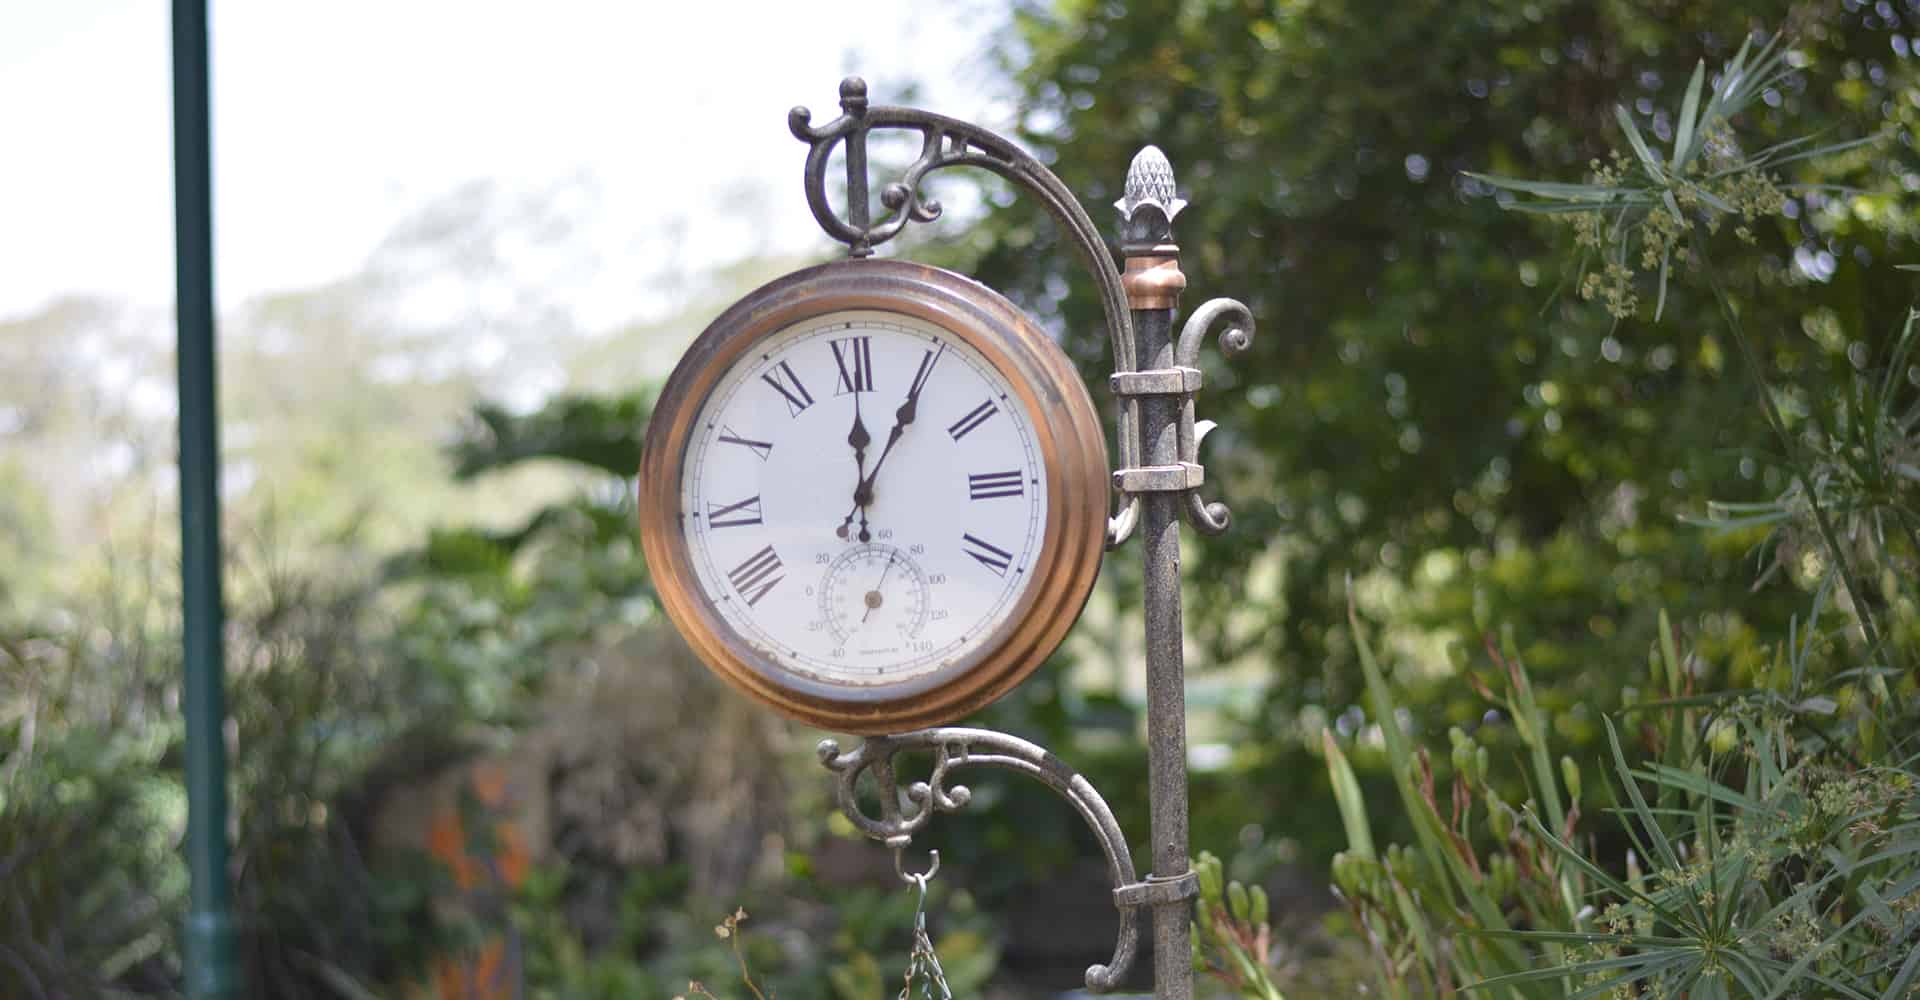 10 best garden clocks that add real character! jul 2020